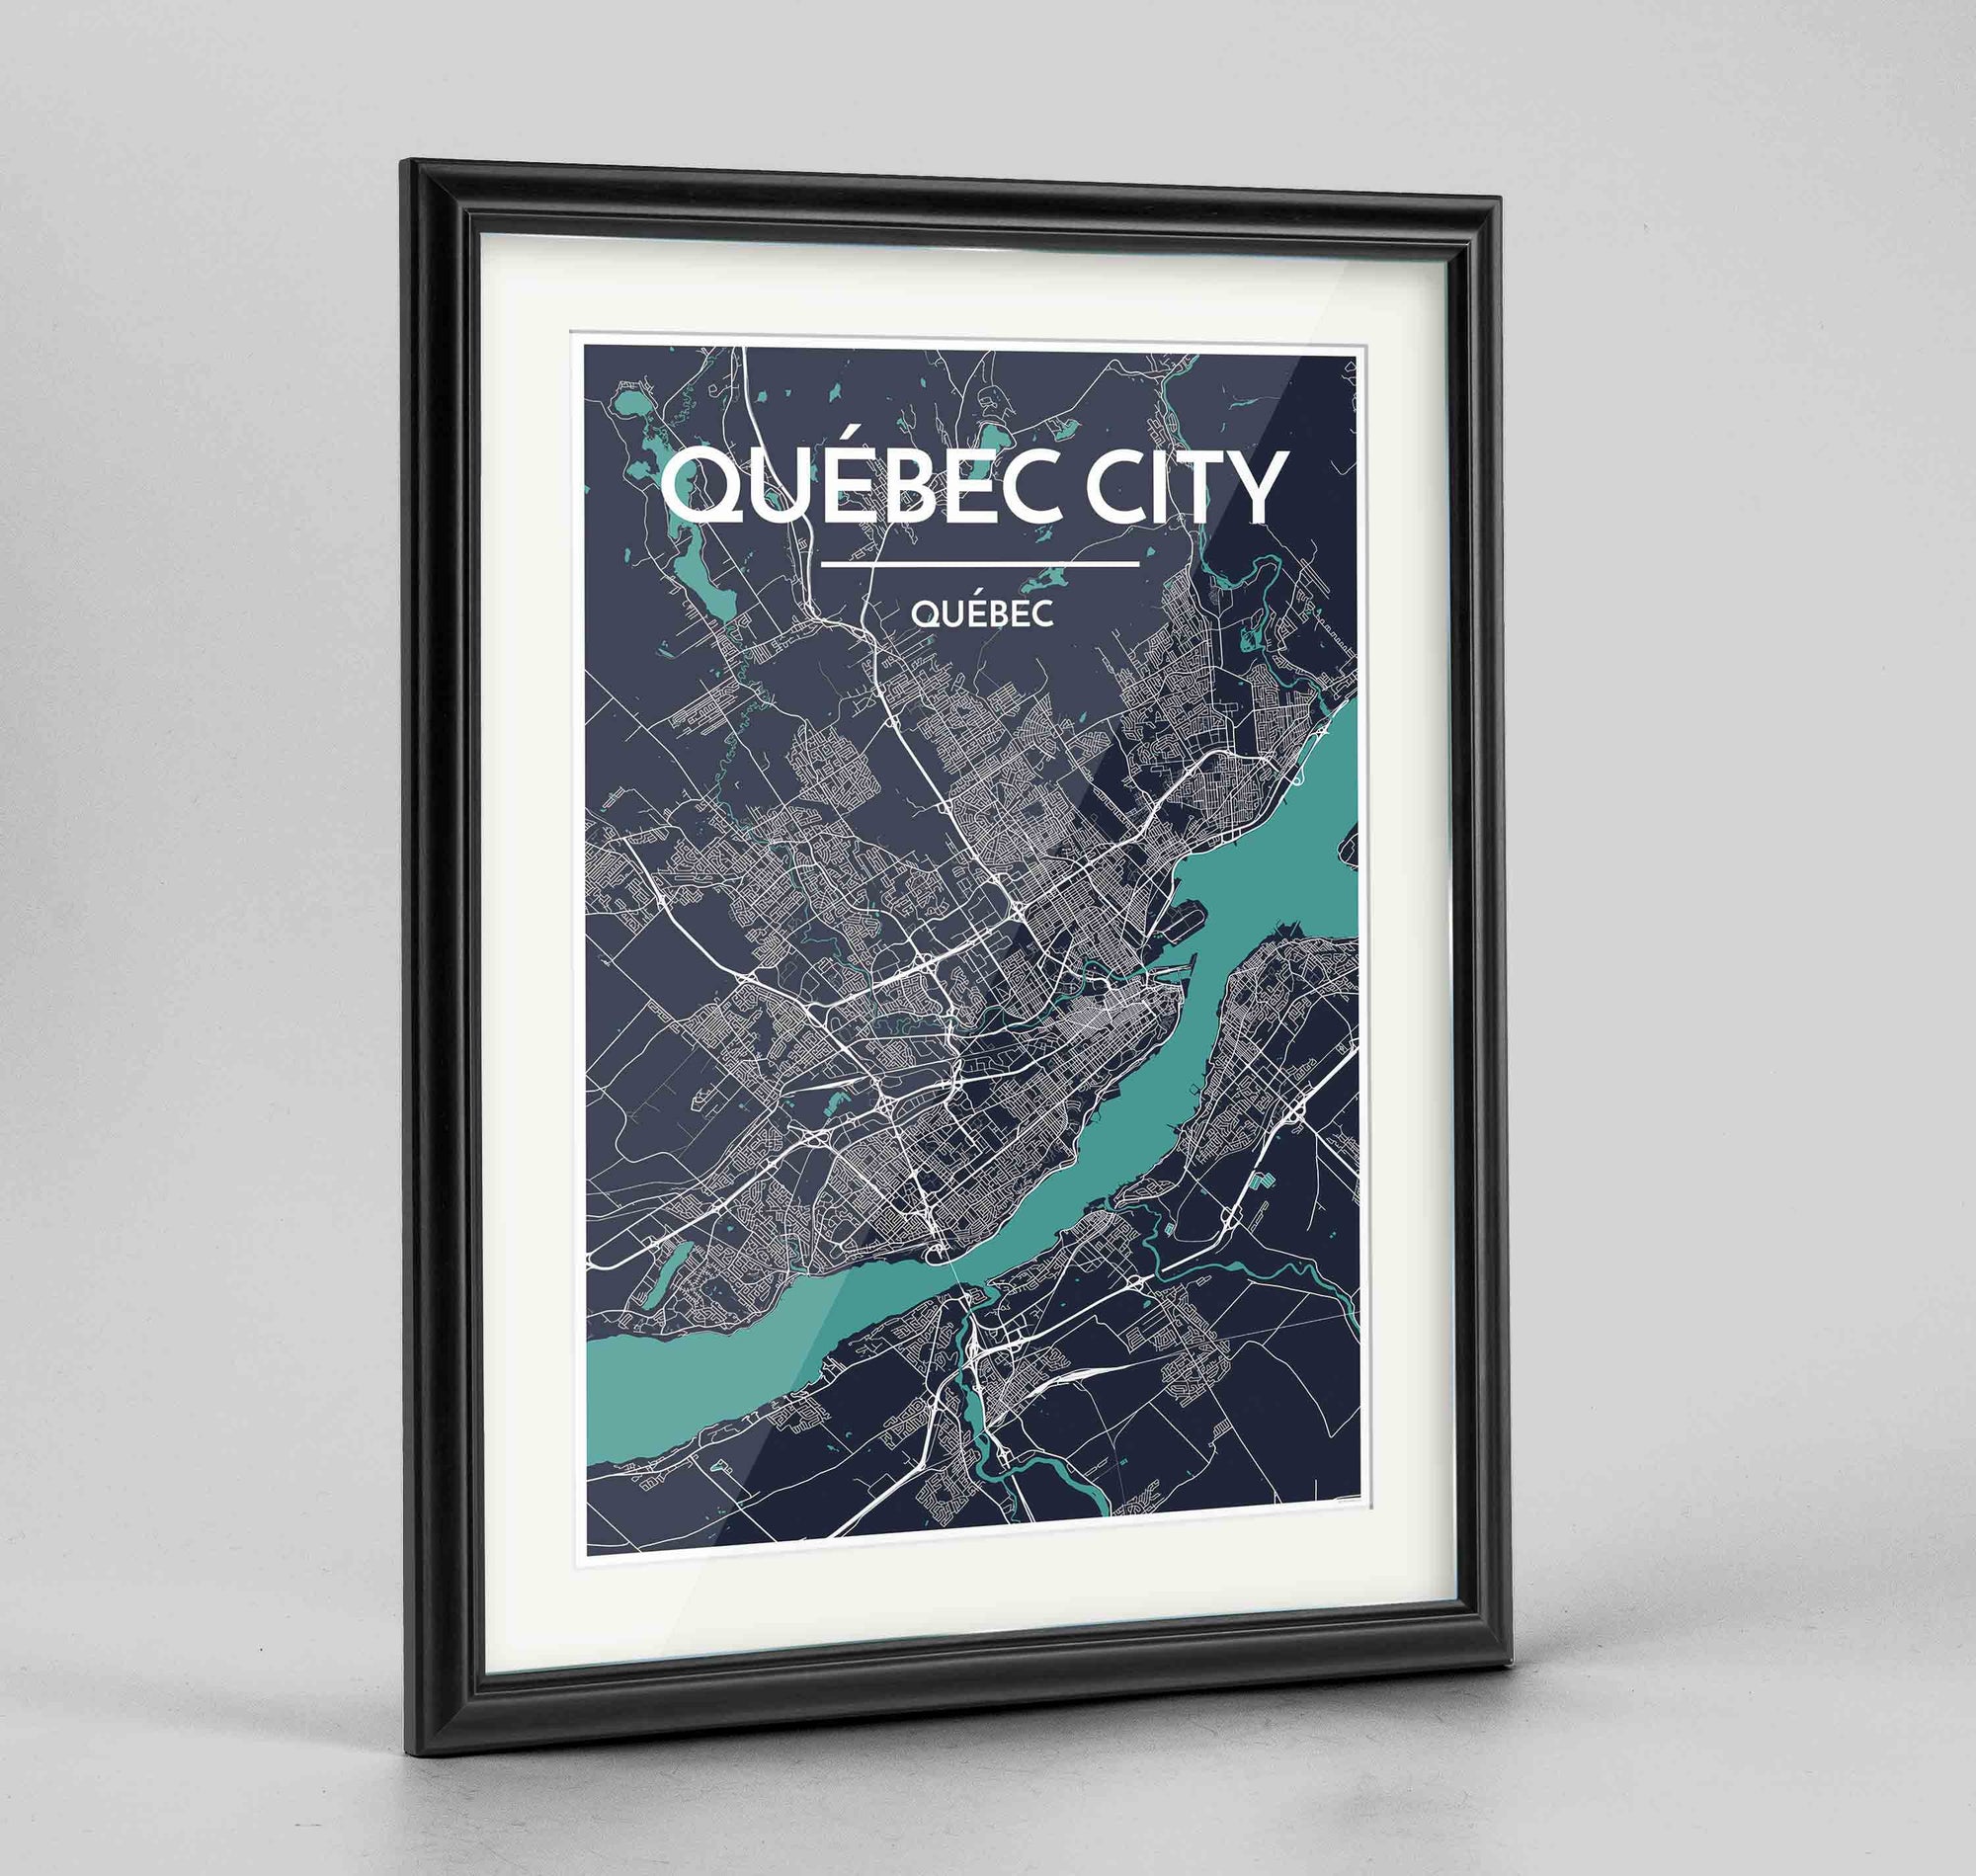 Framed Quebec City Map 24x36" Traditional Black frame Point Two Design Group